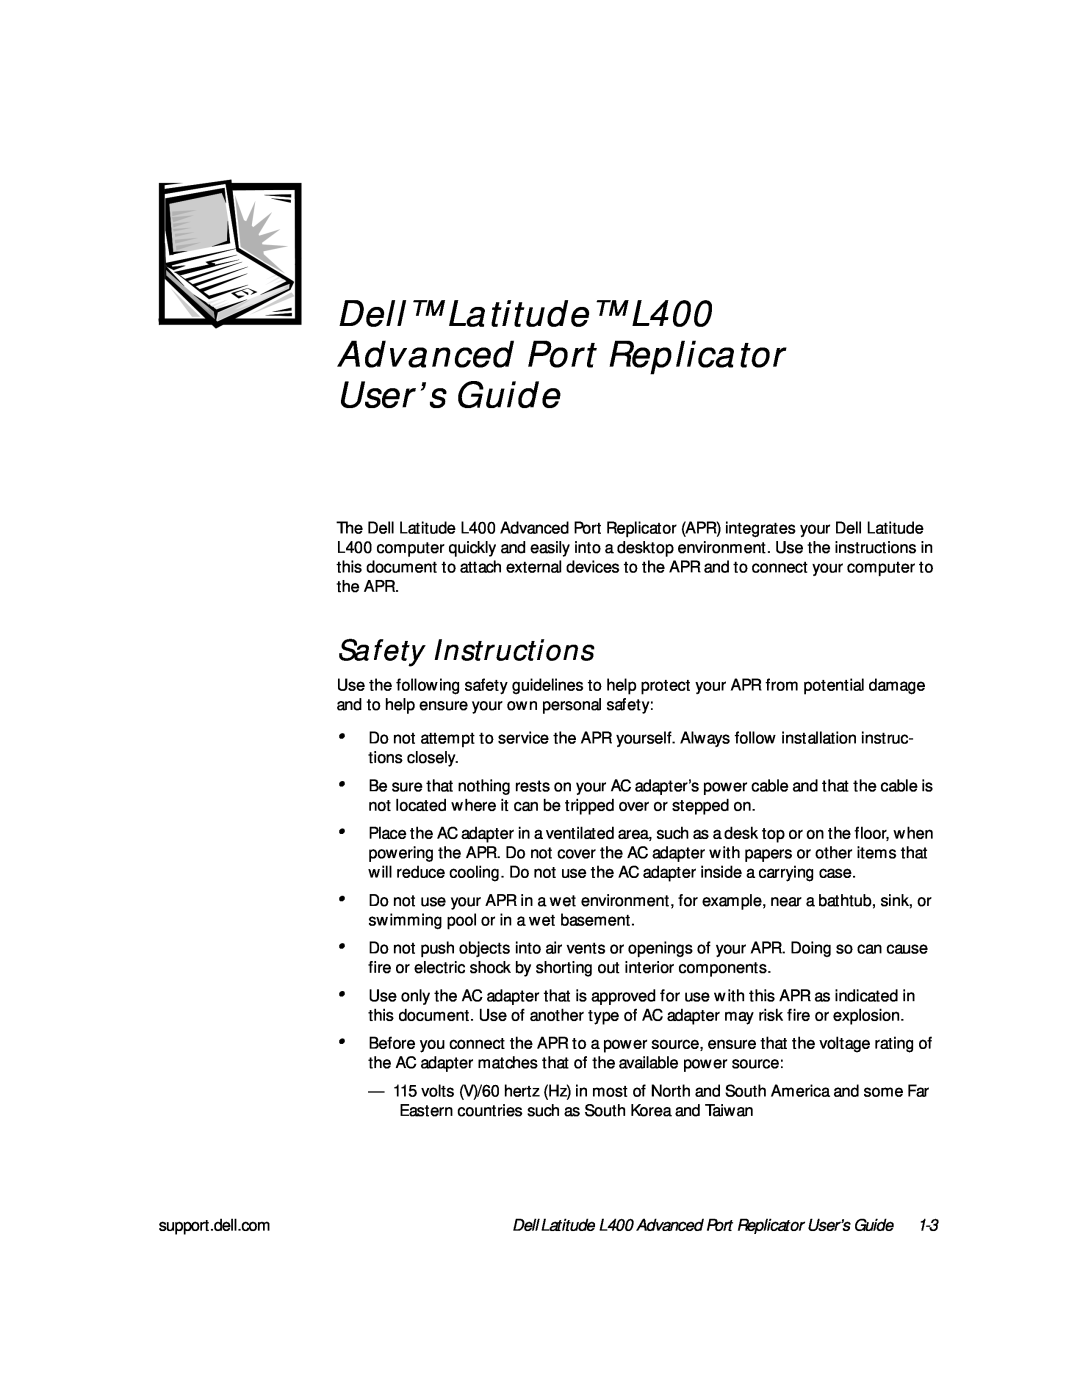 Dell manual Dell Latitude L400 Advanced Port Replicator, User’s Guide, Safety Instructions 